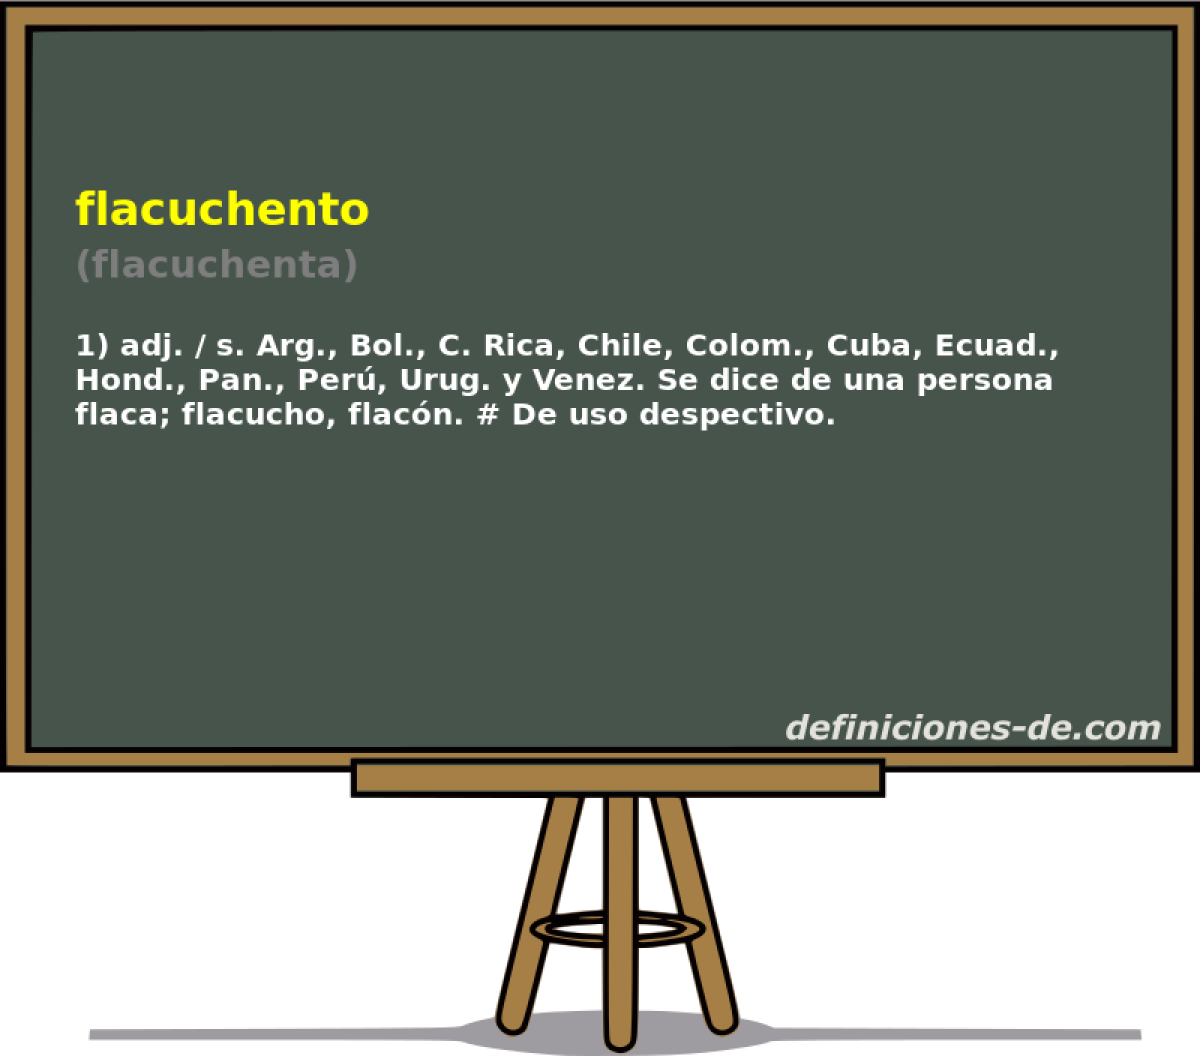 flacuchento (flacuchenta)